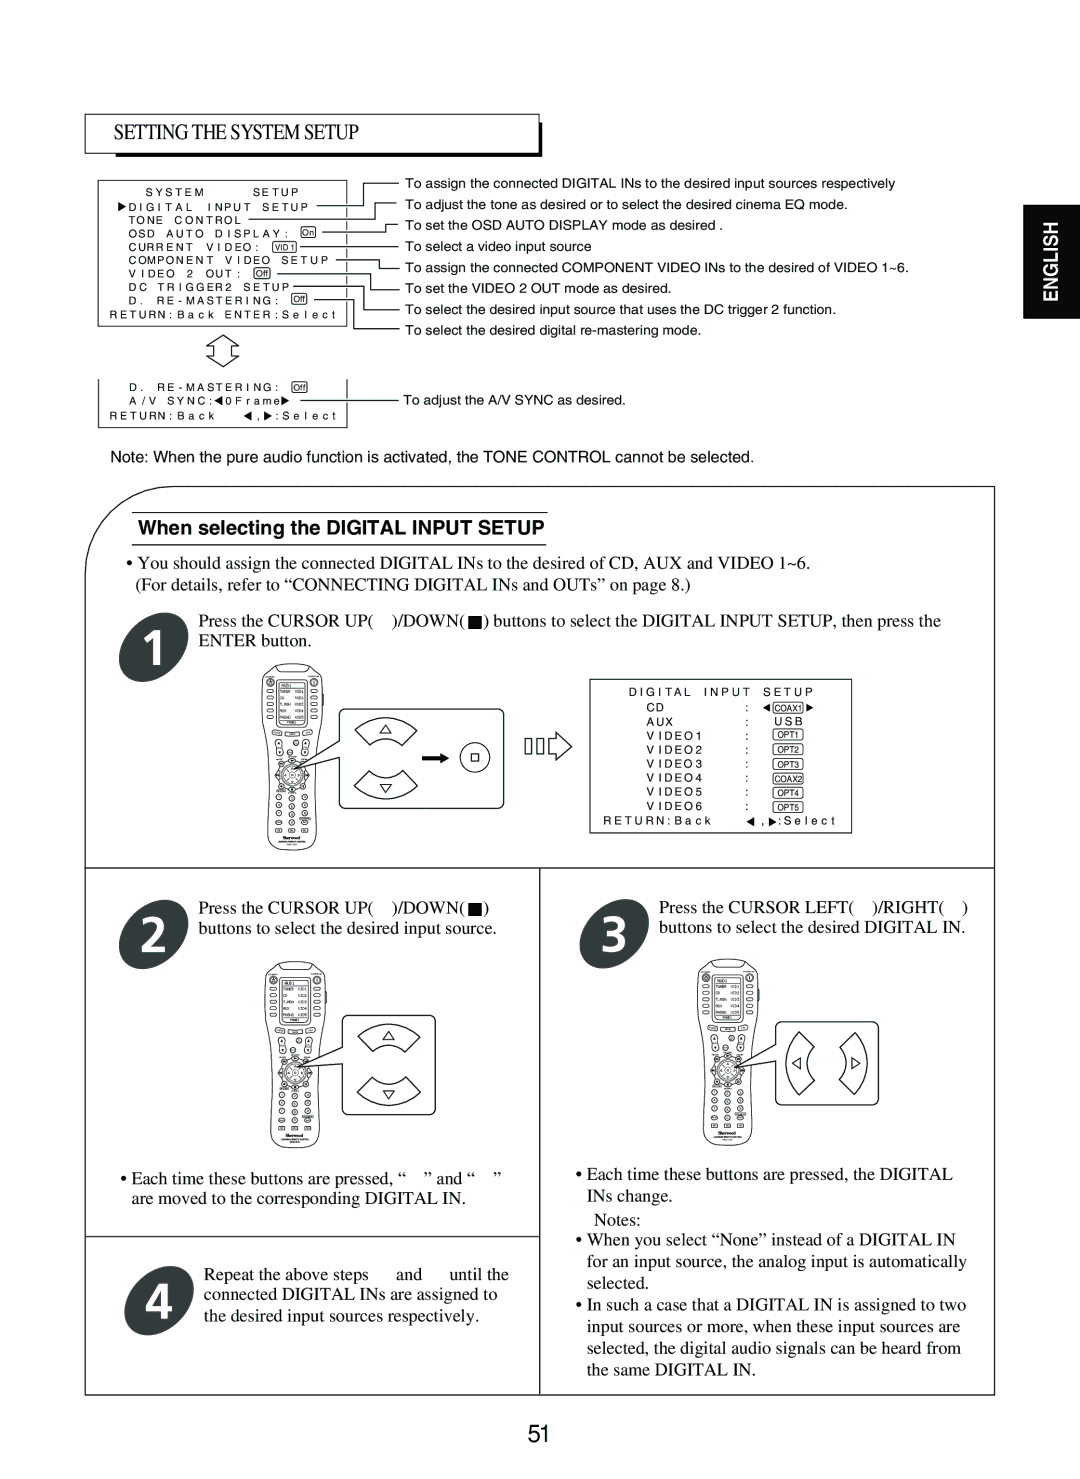 Sherwood P-965 manual Setting the System Setup, When selecting the Digital Input Setup 